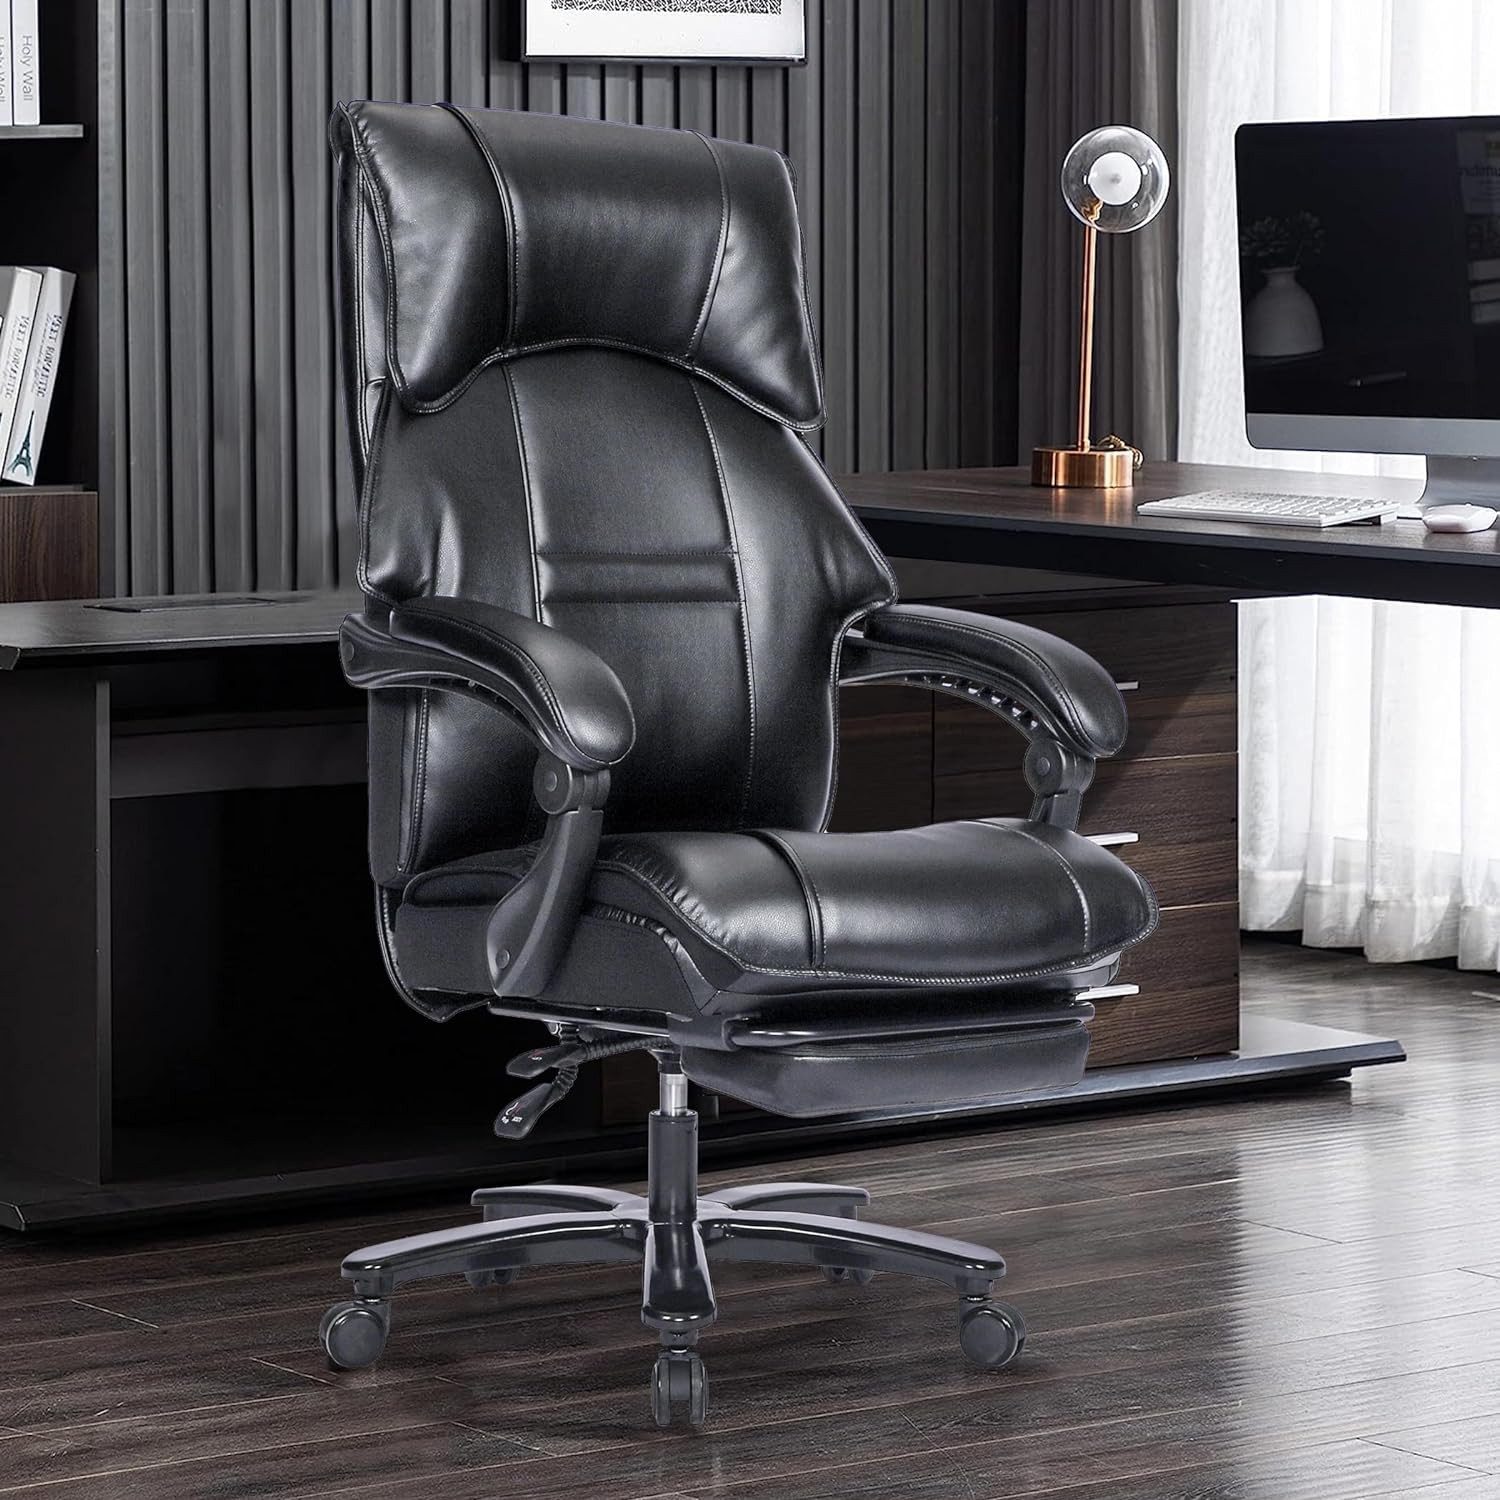 Wenta Bürostuhl Chefsessel Fantasylab Premium Bürostuhl, ergonomischer, Gaming-Stuhl (200kg Belastbar, Verstellbare Rückenlehne, Hochwertiges Leder, mit Fußstütze, Stabiles Metallgestell)